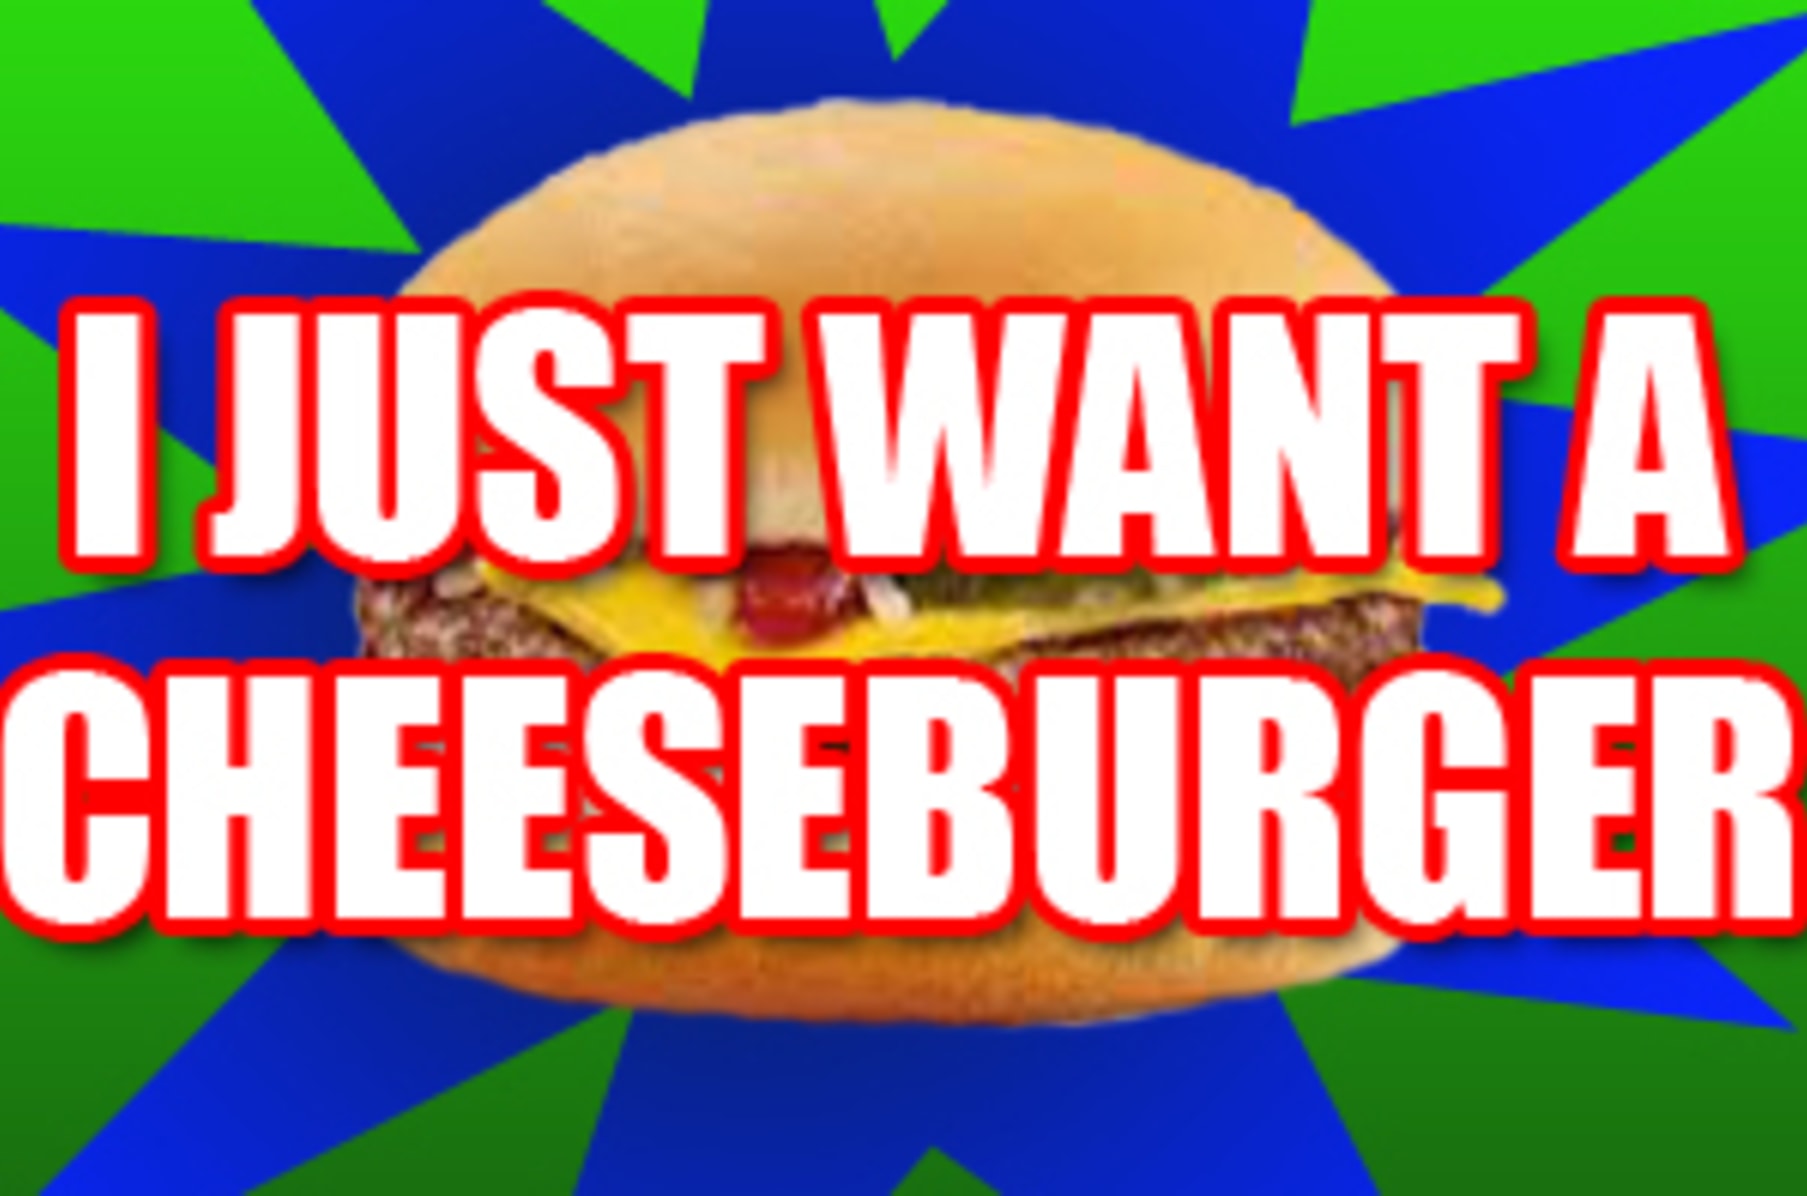 High Quality Cheese burger Blank Meme Template